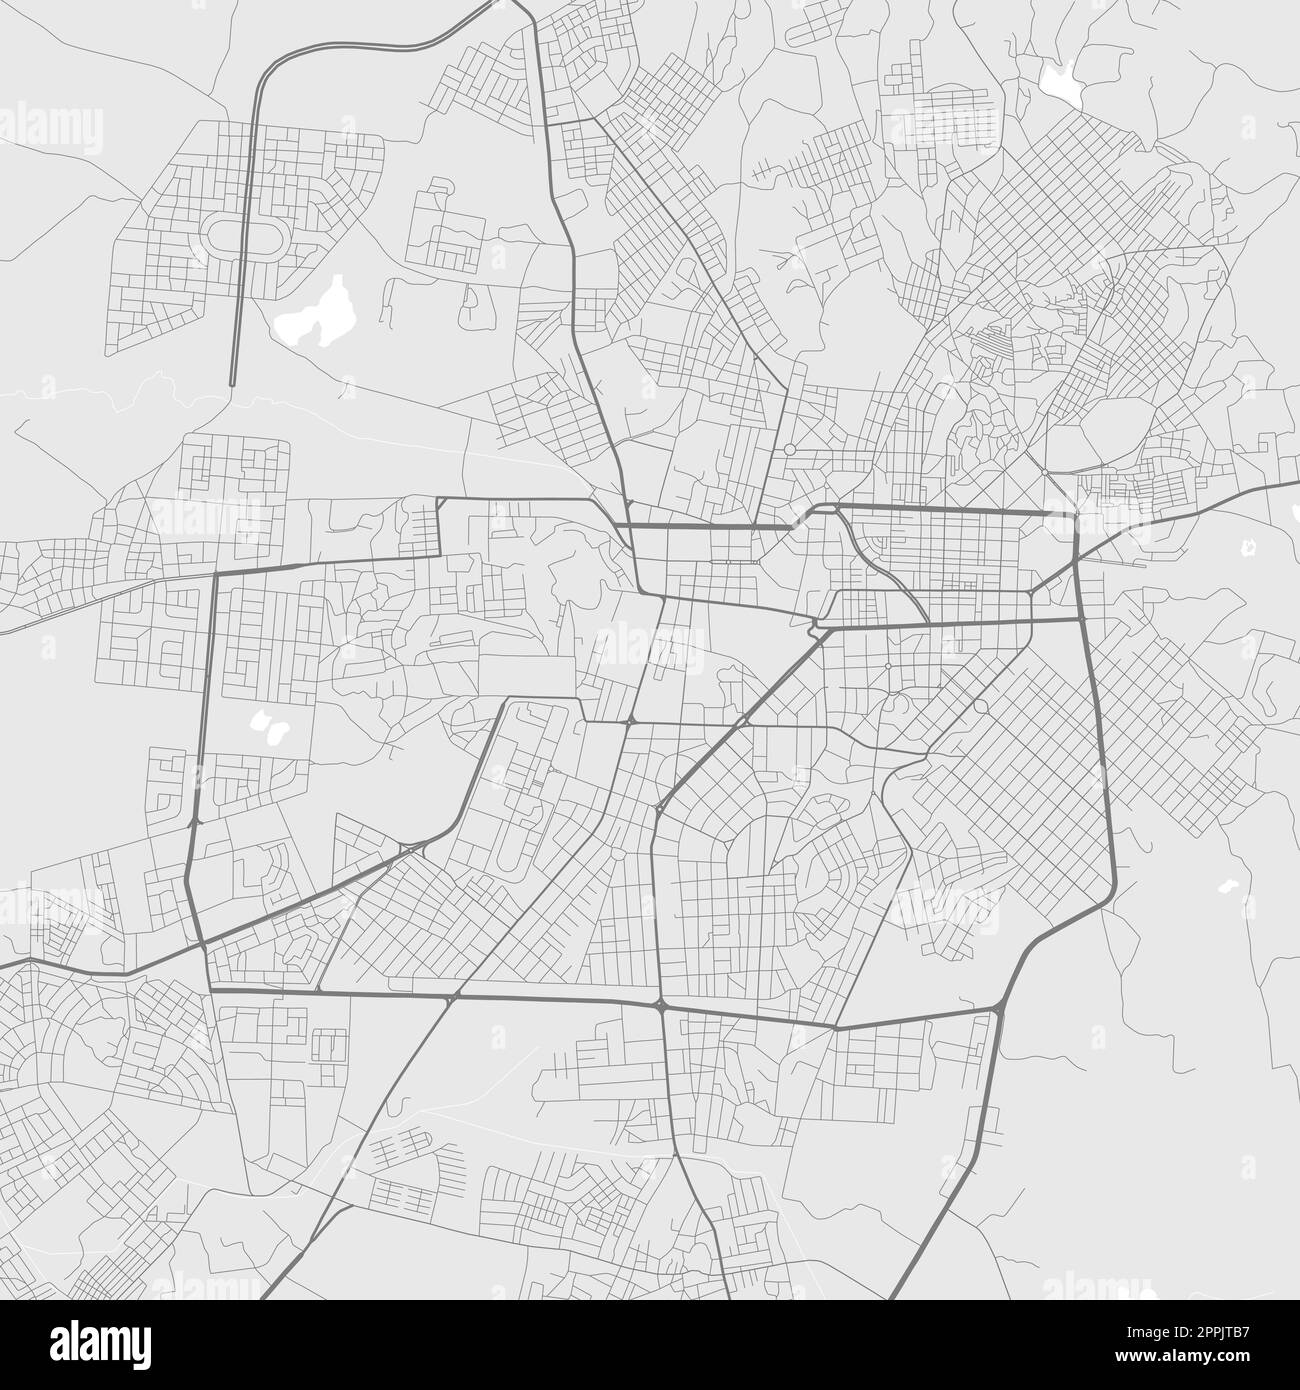 Map of Asmara city, Eritrea. Urban black and white poster. Asmera road map image with metropolitan city area view. Stock Vector